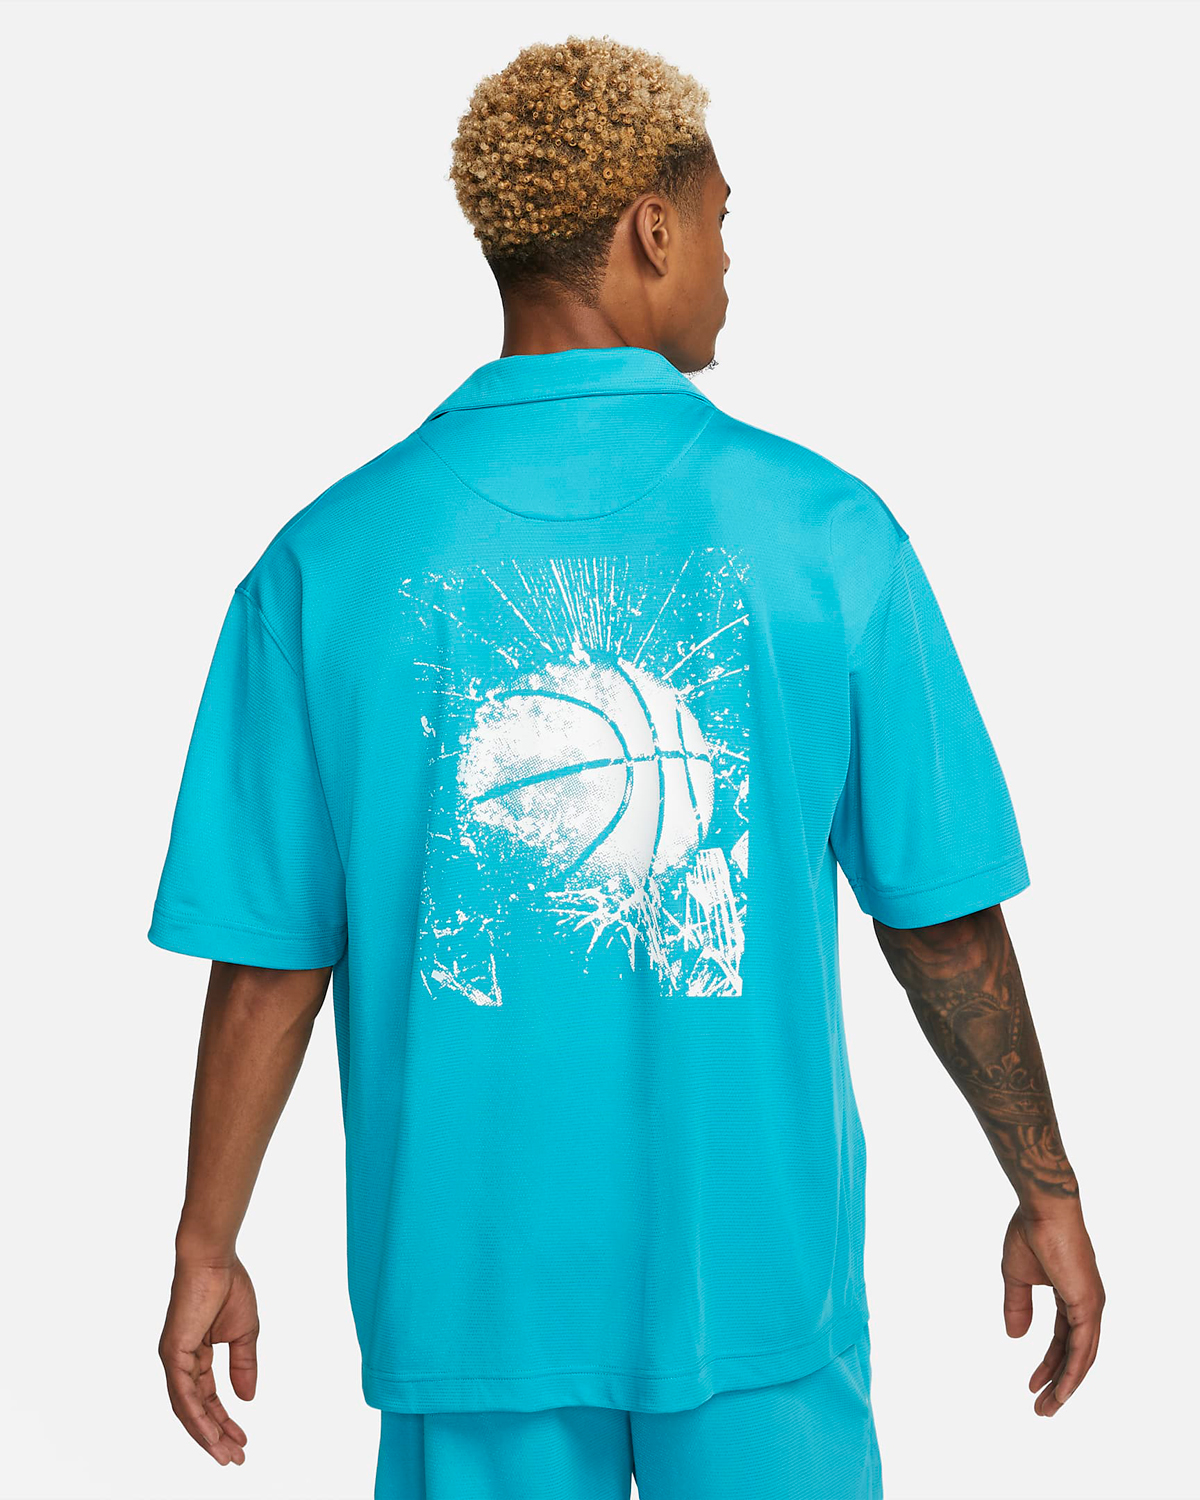 Nike Short Sleeve Basketball Top Teal Nebula 2